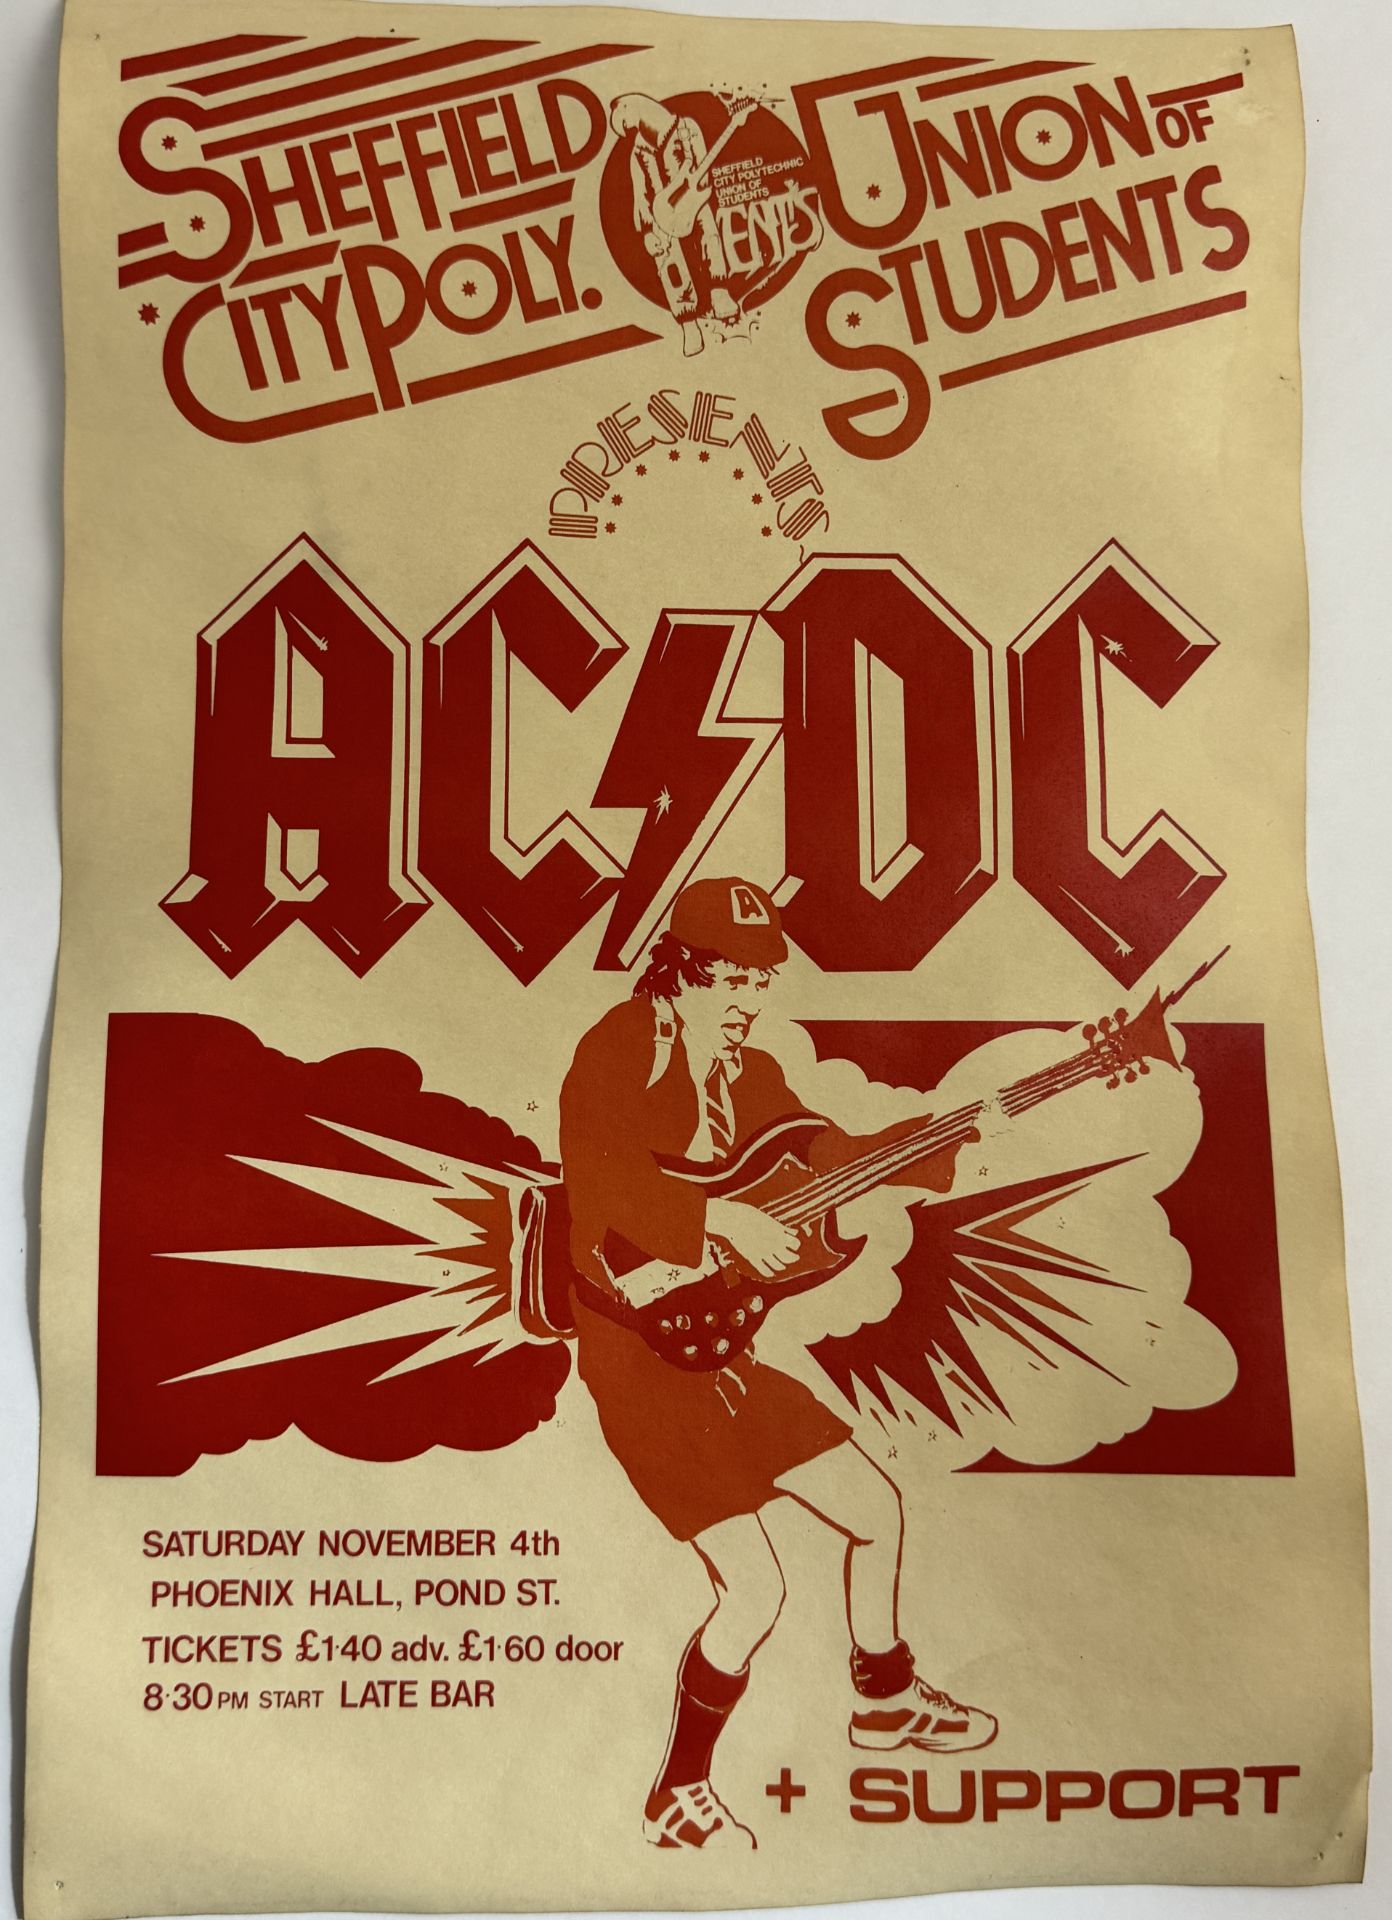 AC DC Concert Poster